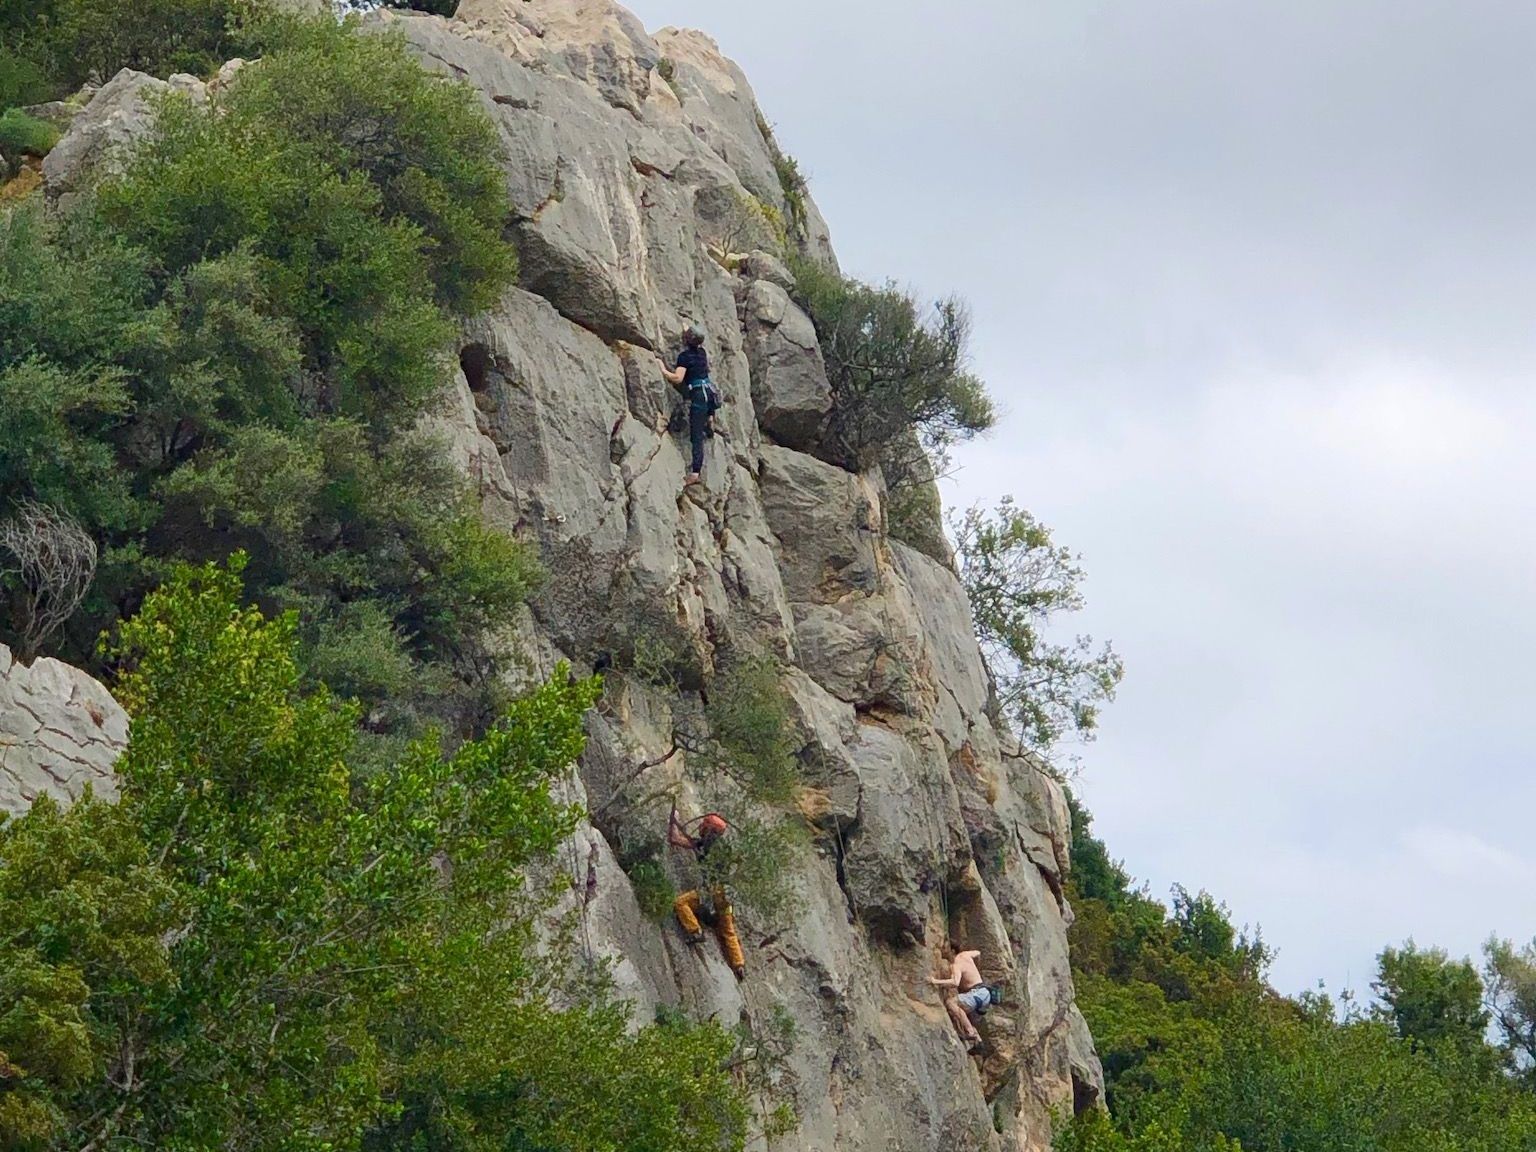 The rocks at Cala Fuili are also very popular with climbers. Photo: Sascha Tegtmeyer